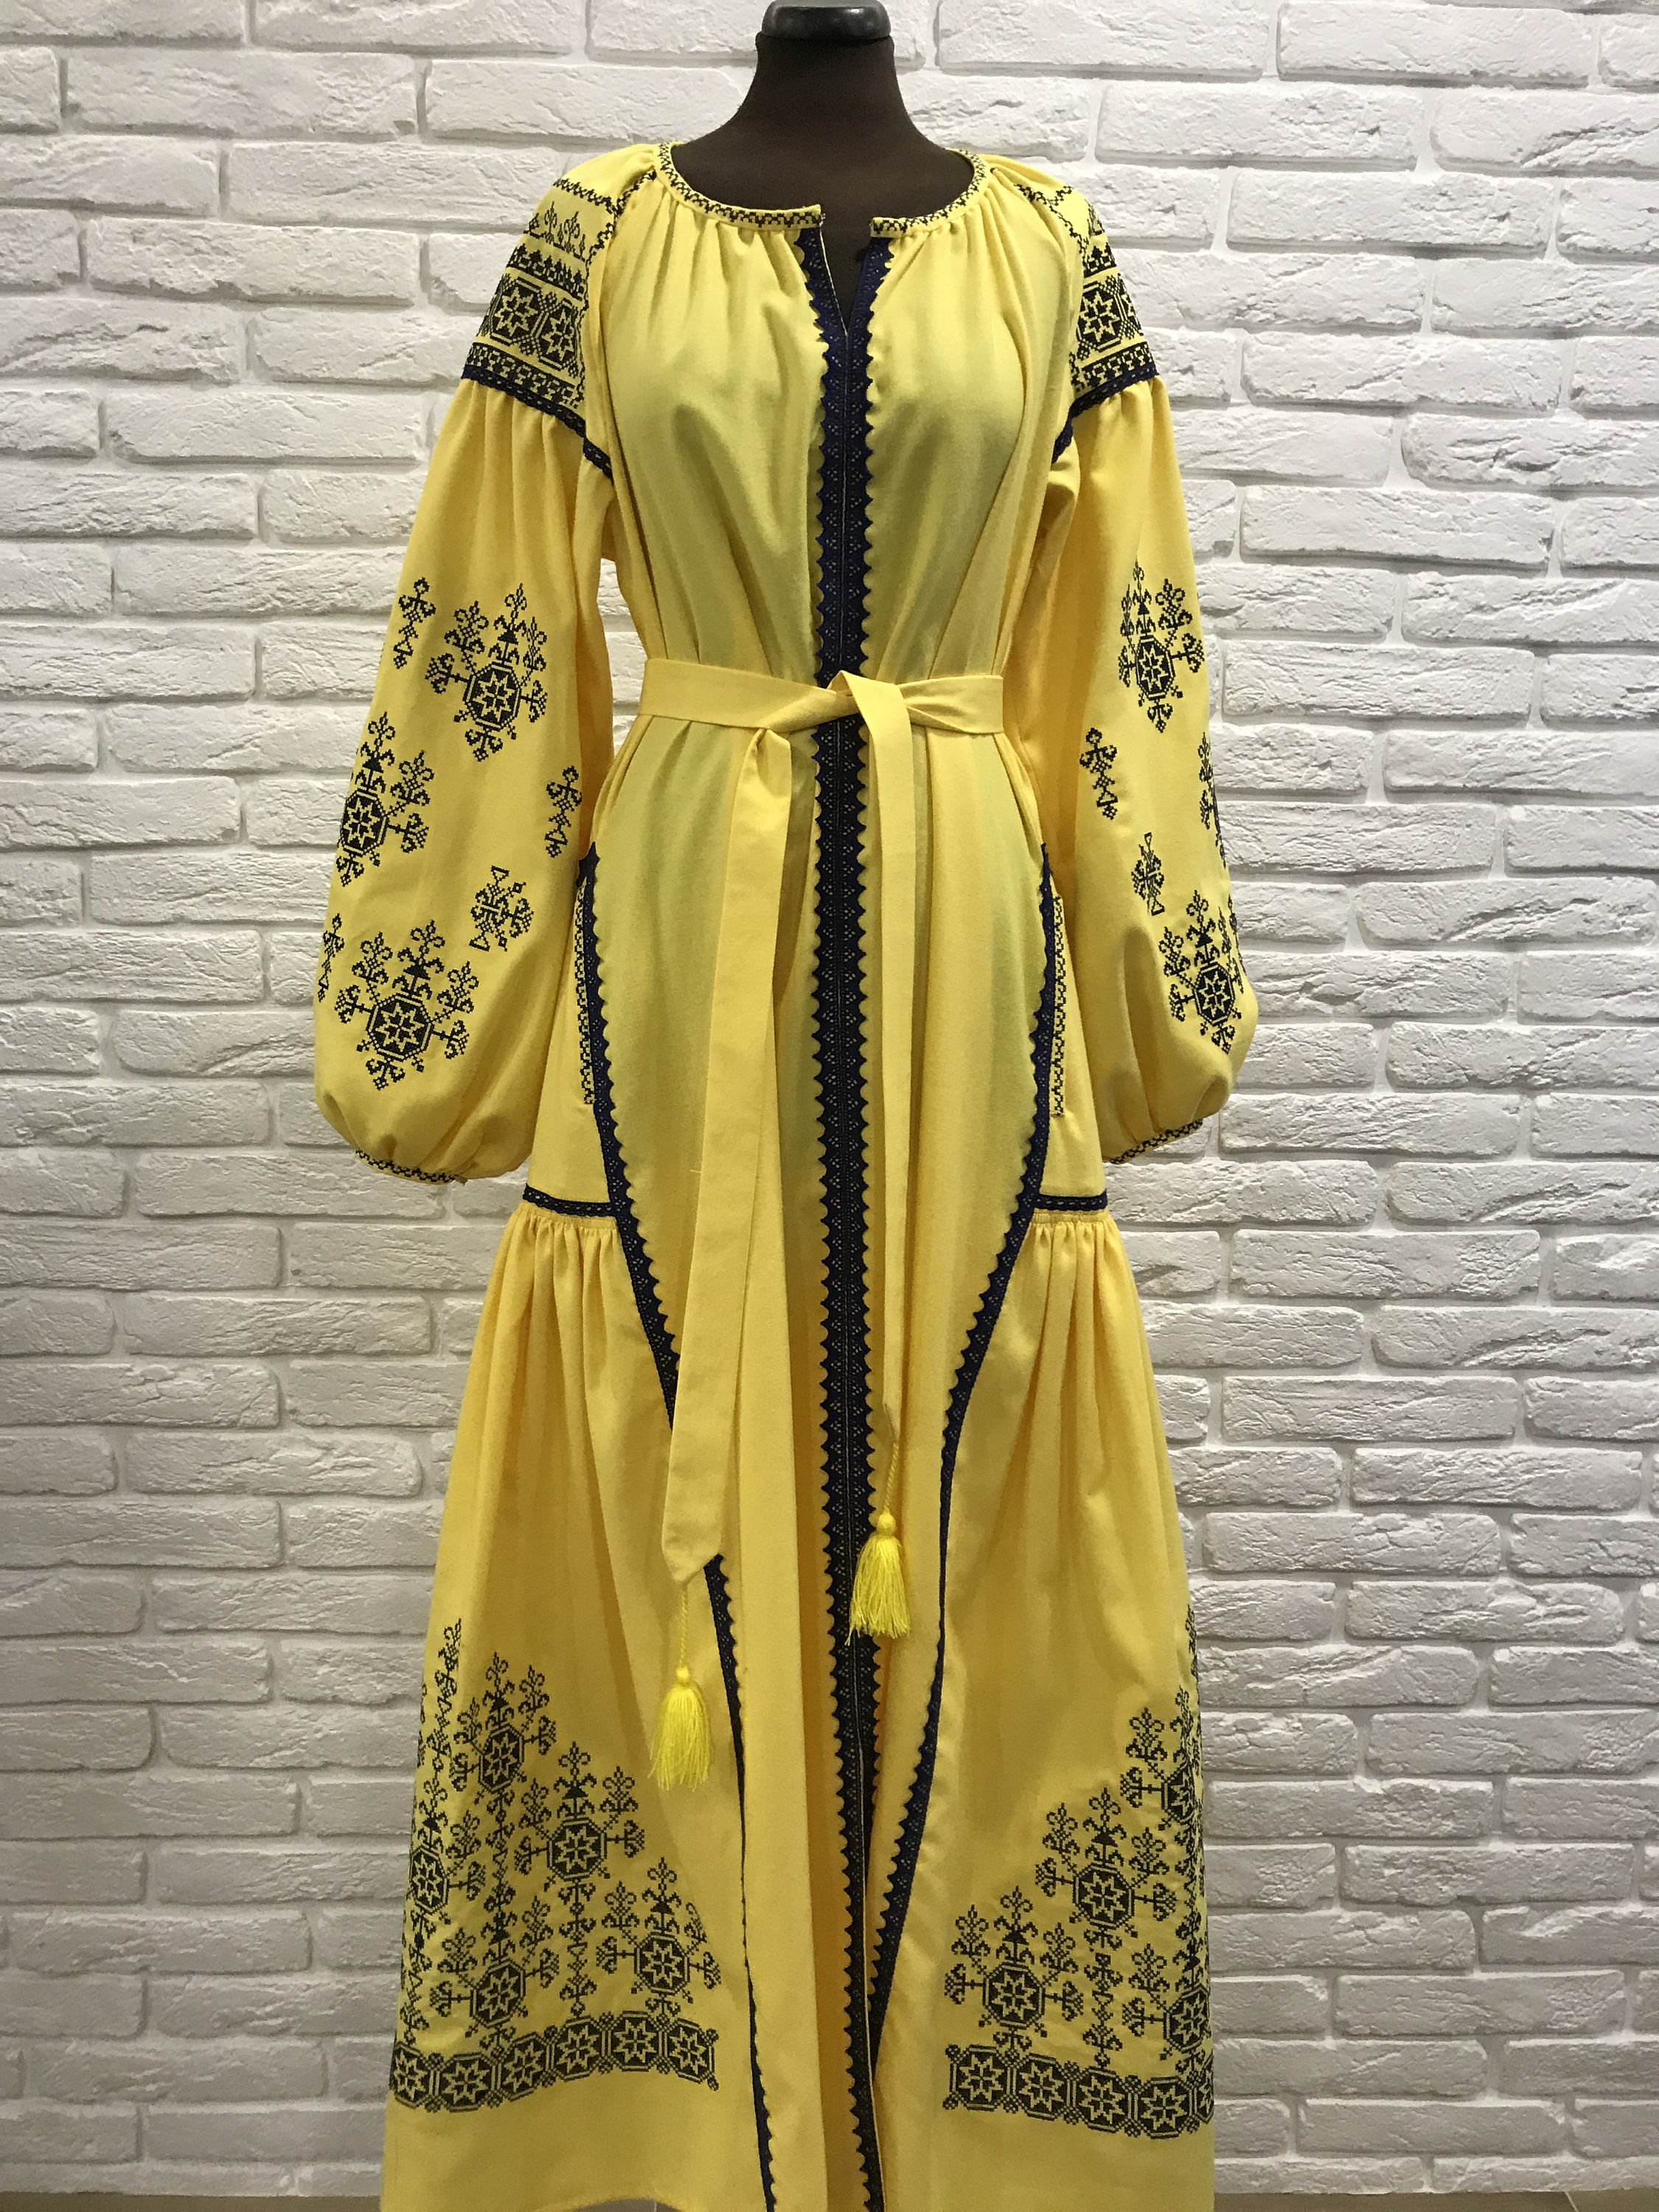 Bohemian Dress with pockets Ukrainian Dress Boho Embroidered | Etsy